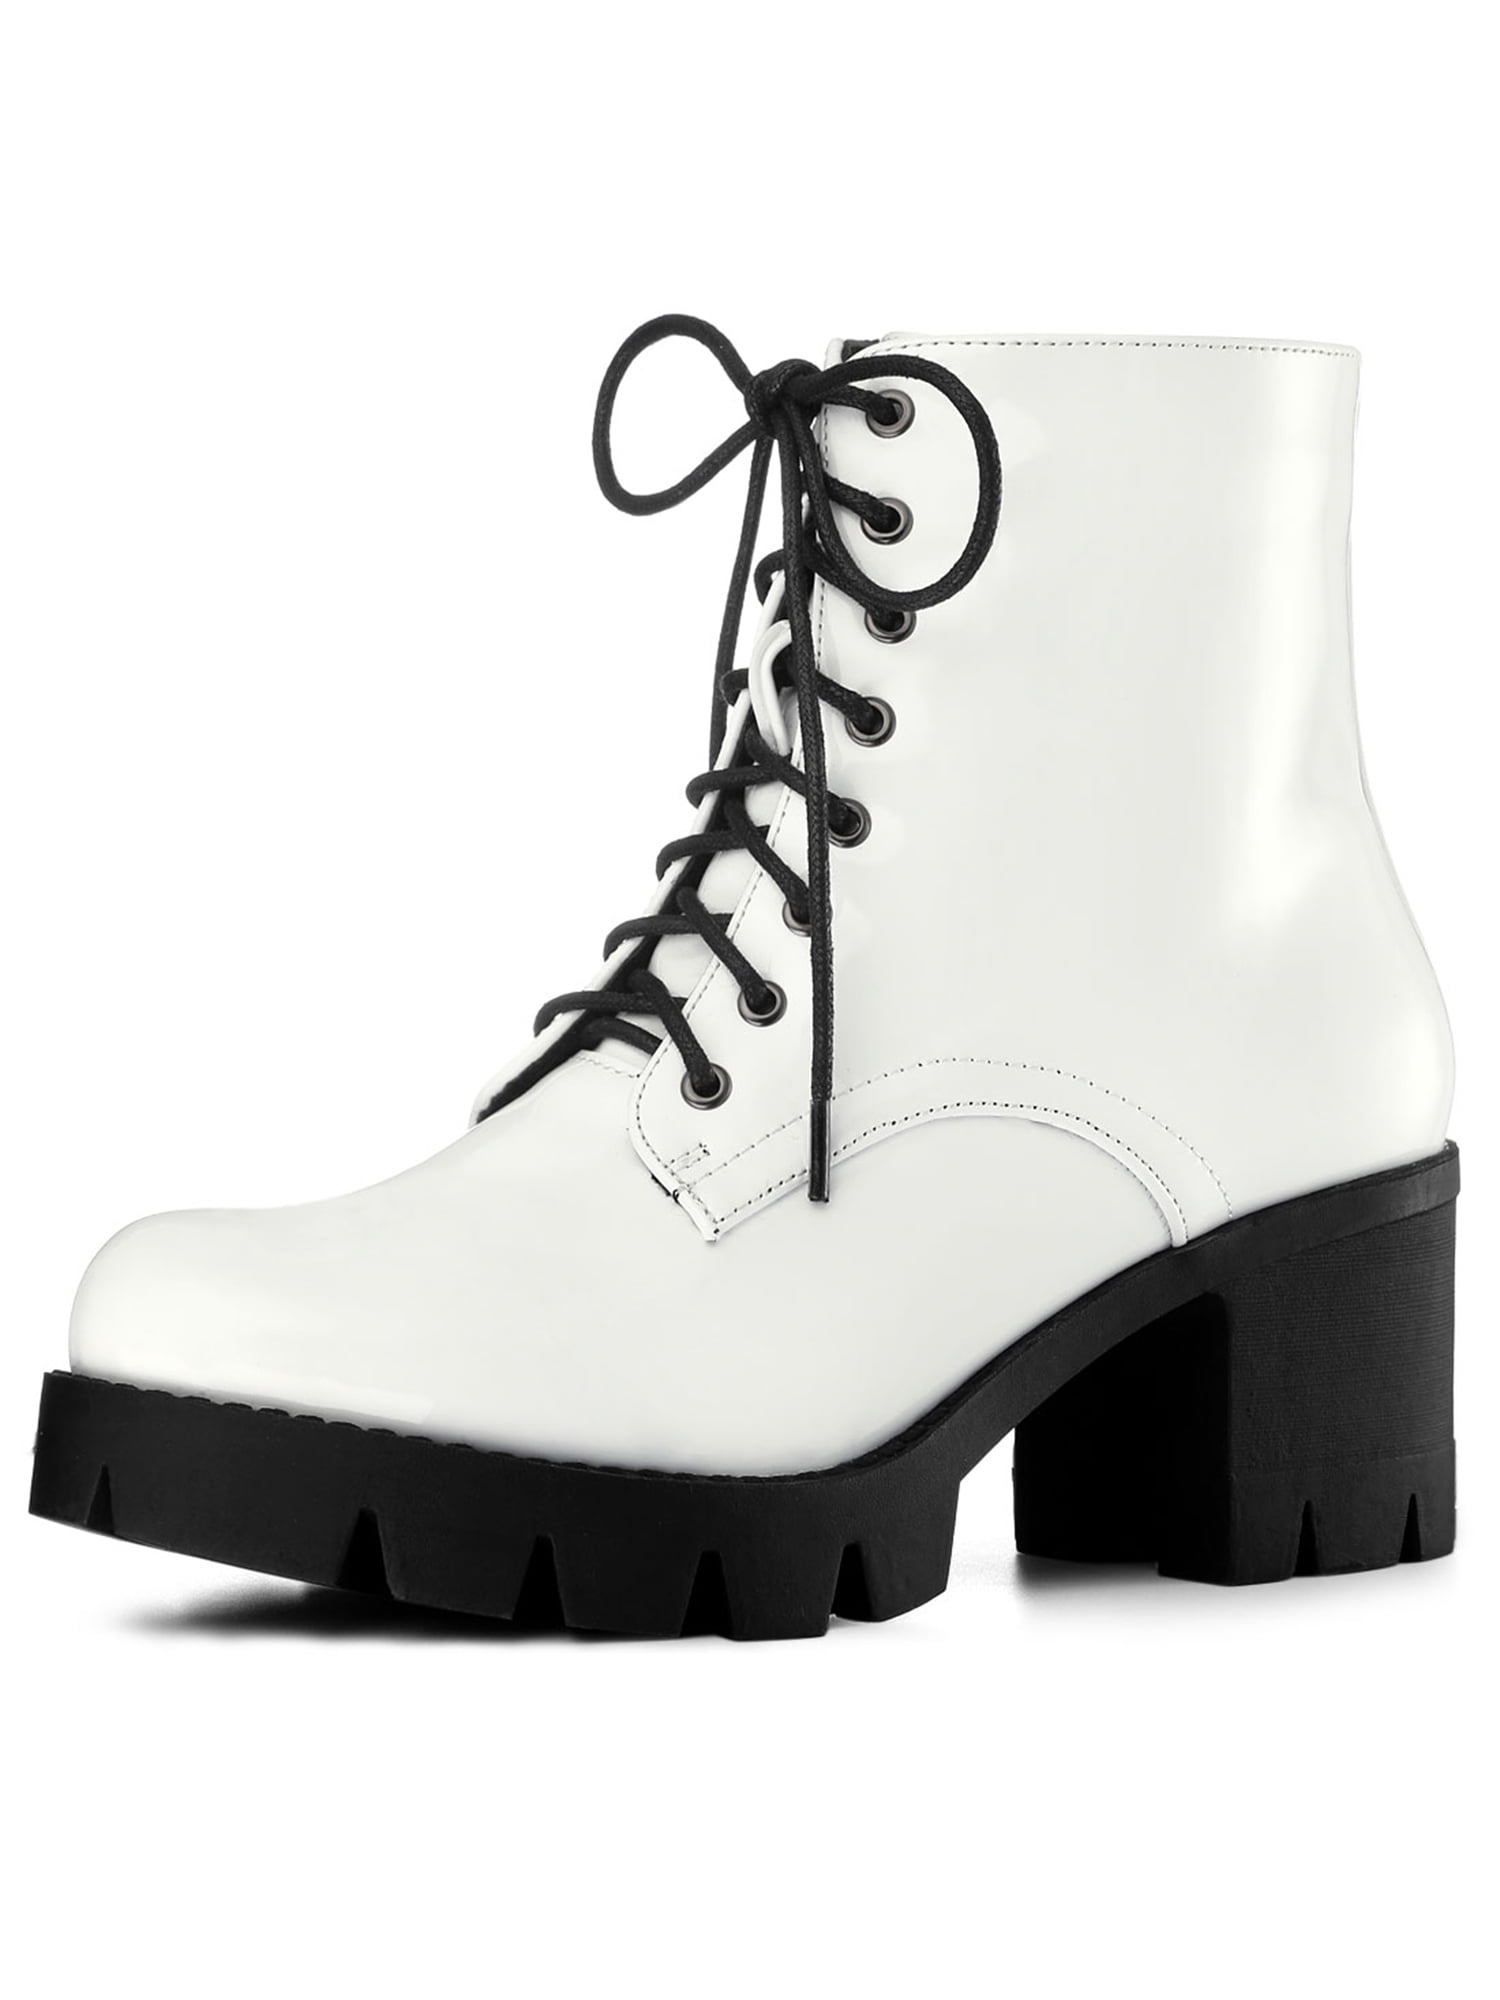 walmart white boots